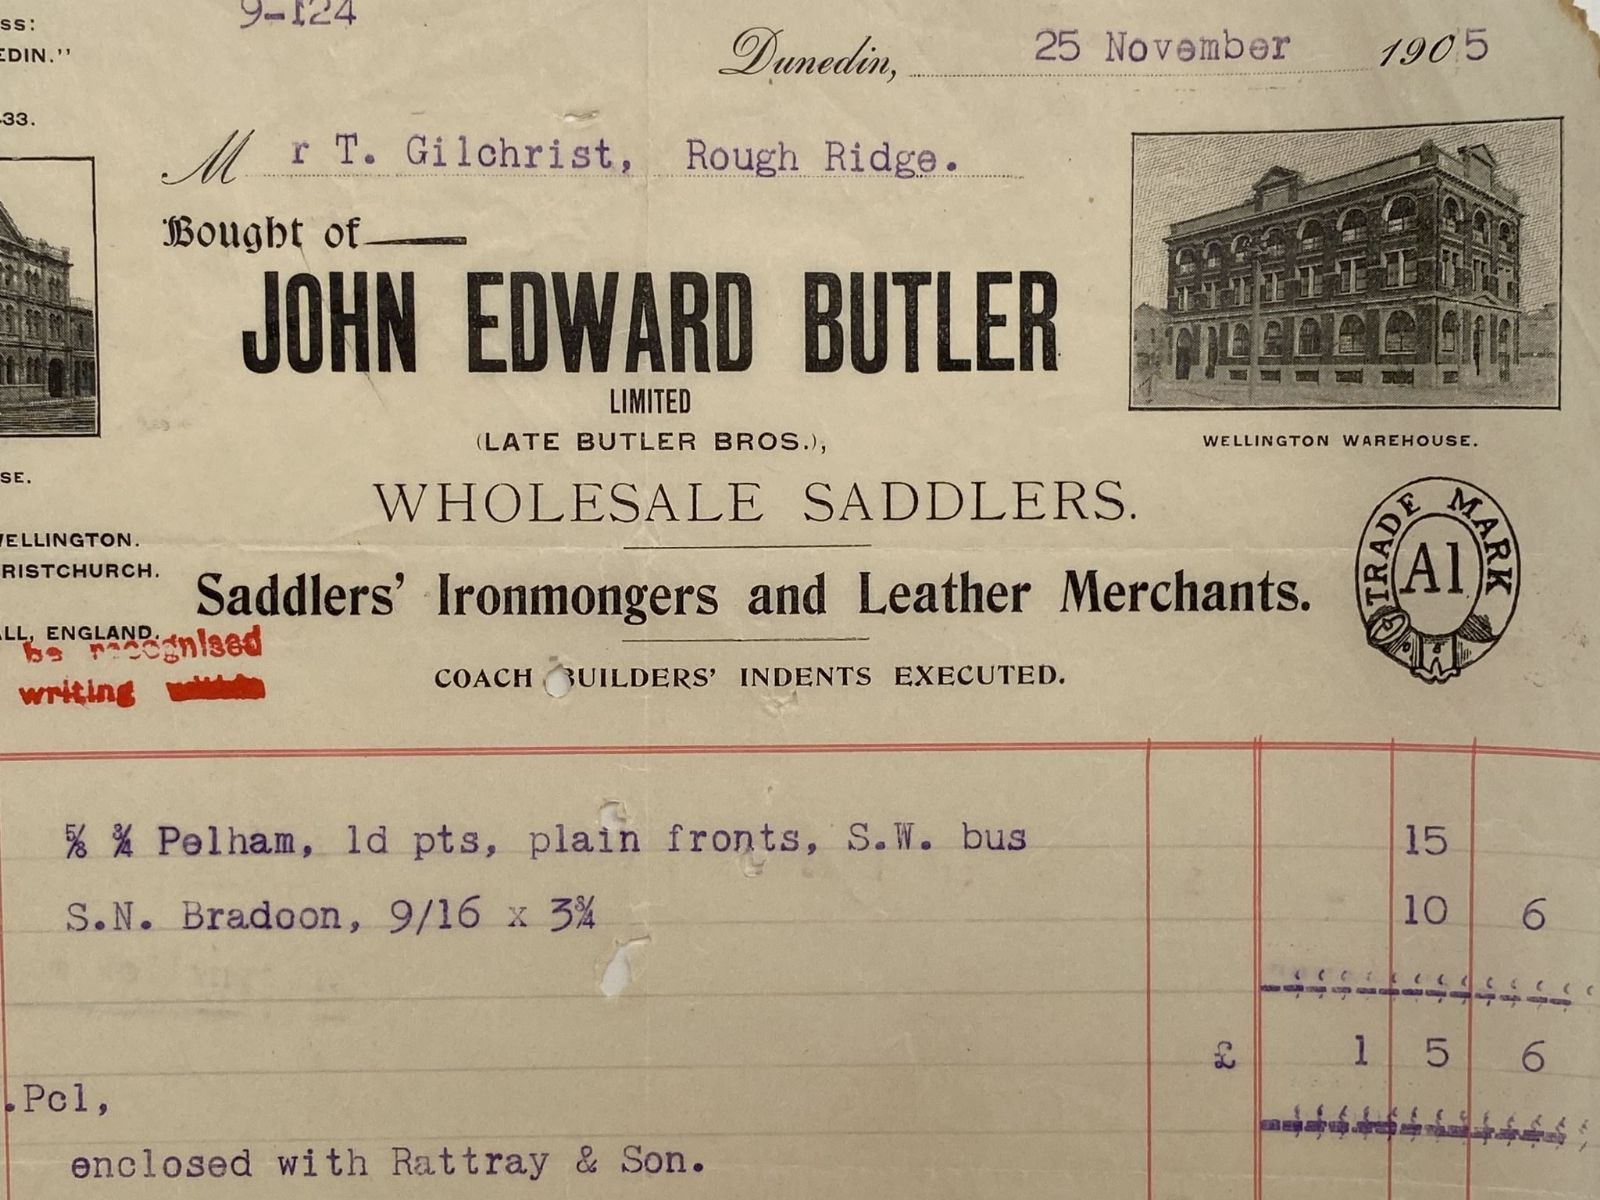 ANTIQUE INVOICE / RECEIPT: John Edward Butler, Dunedin – Wholesale Saddlers 1905